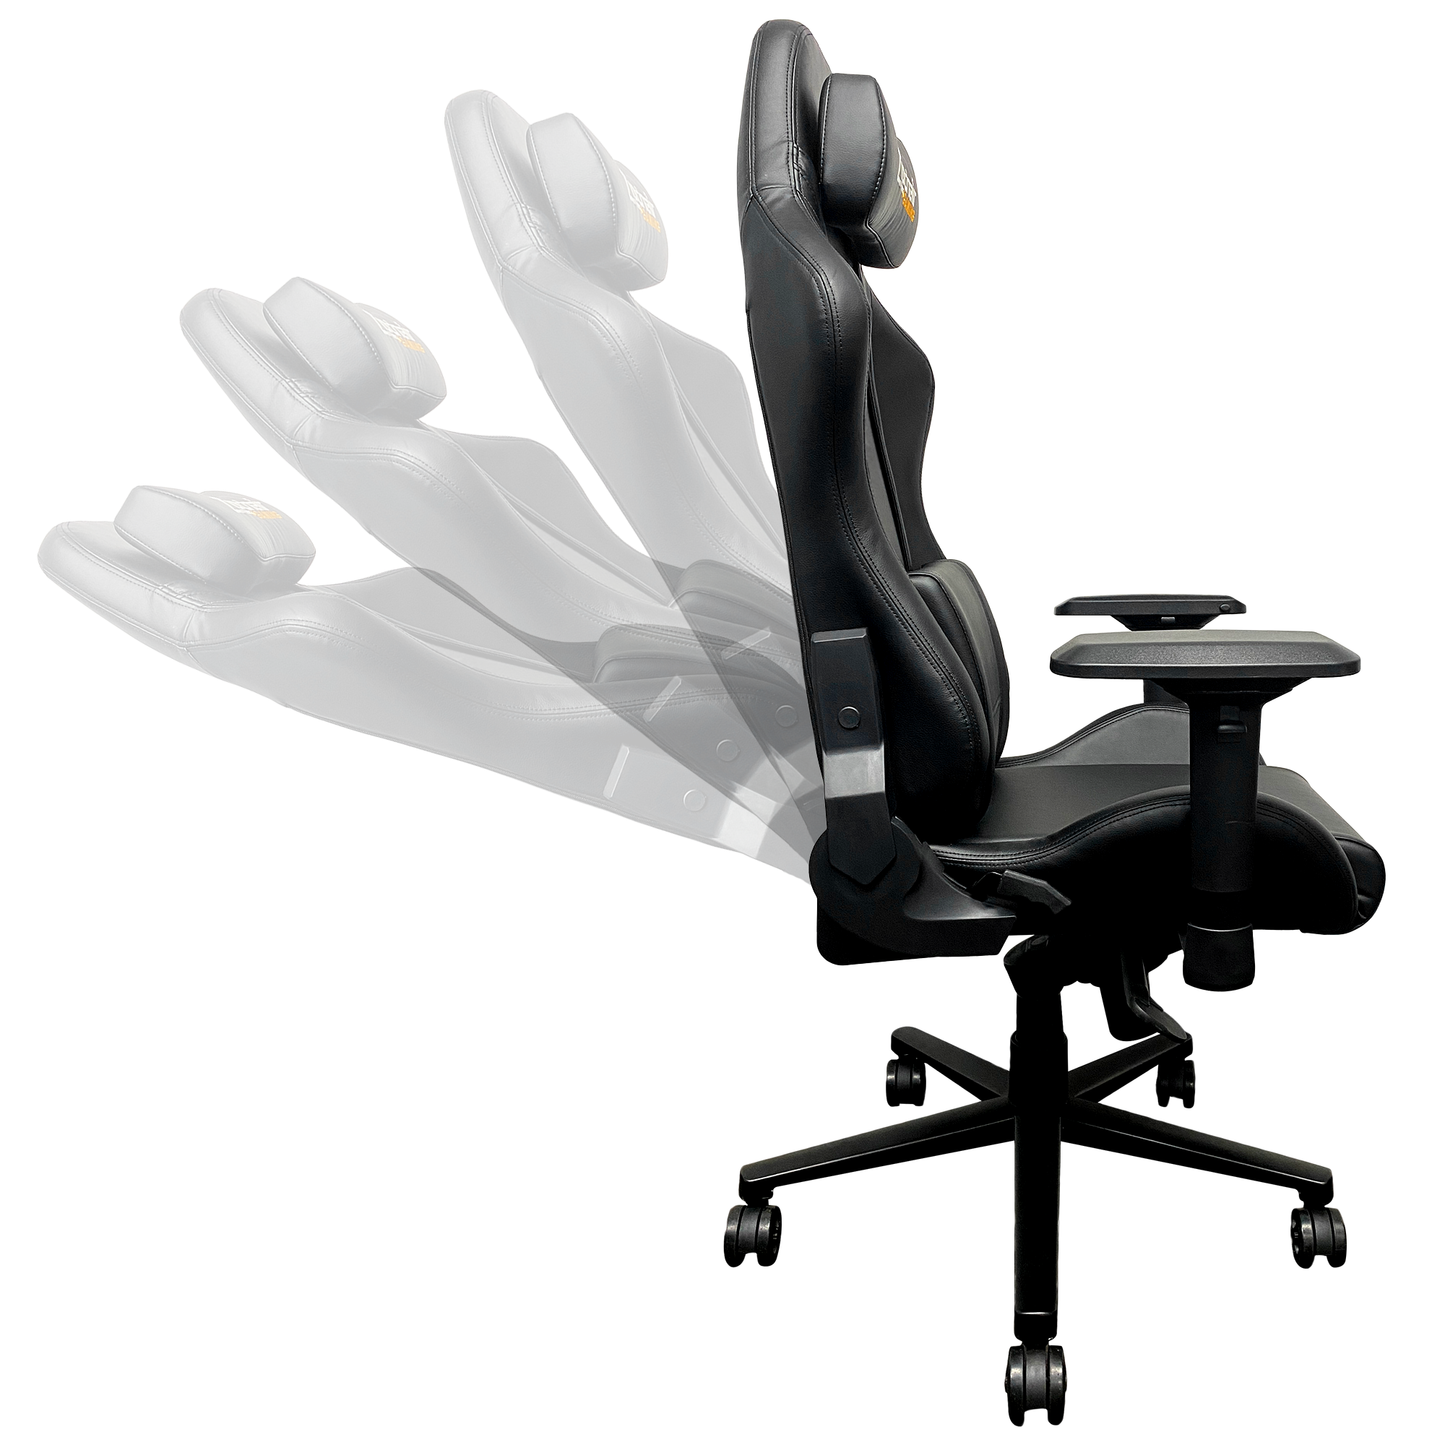 Xpression Pro Gaming Chair with Philadelphia Union Wordmark Logo